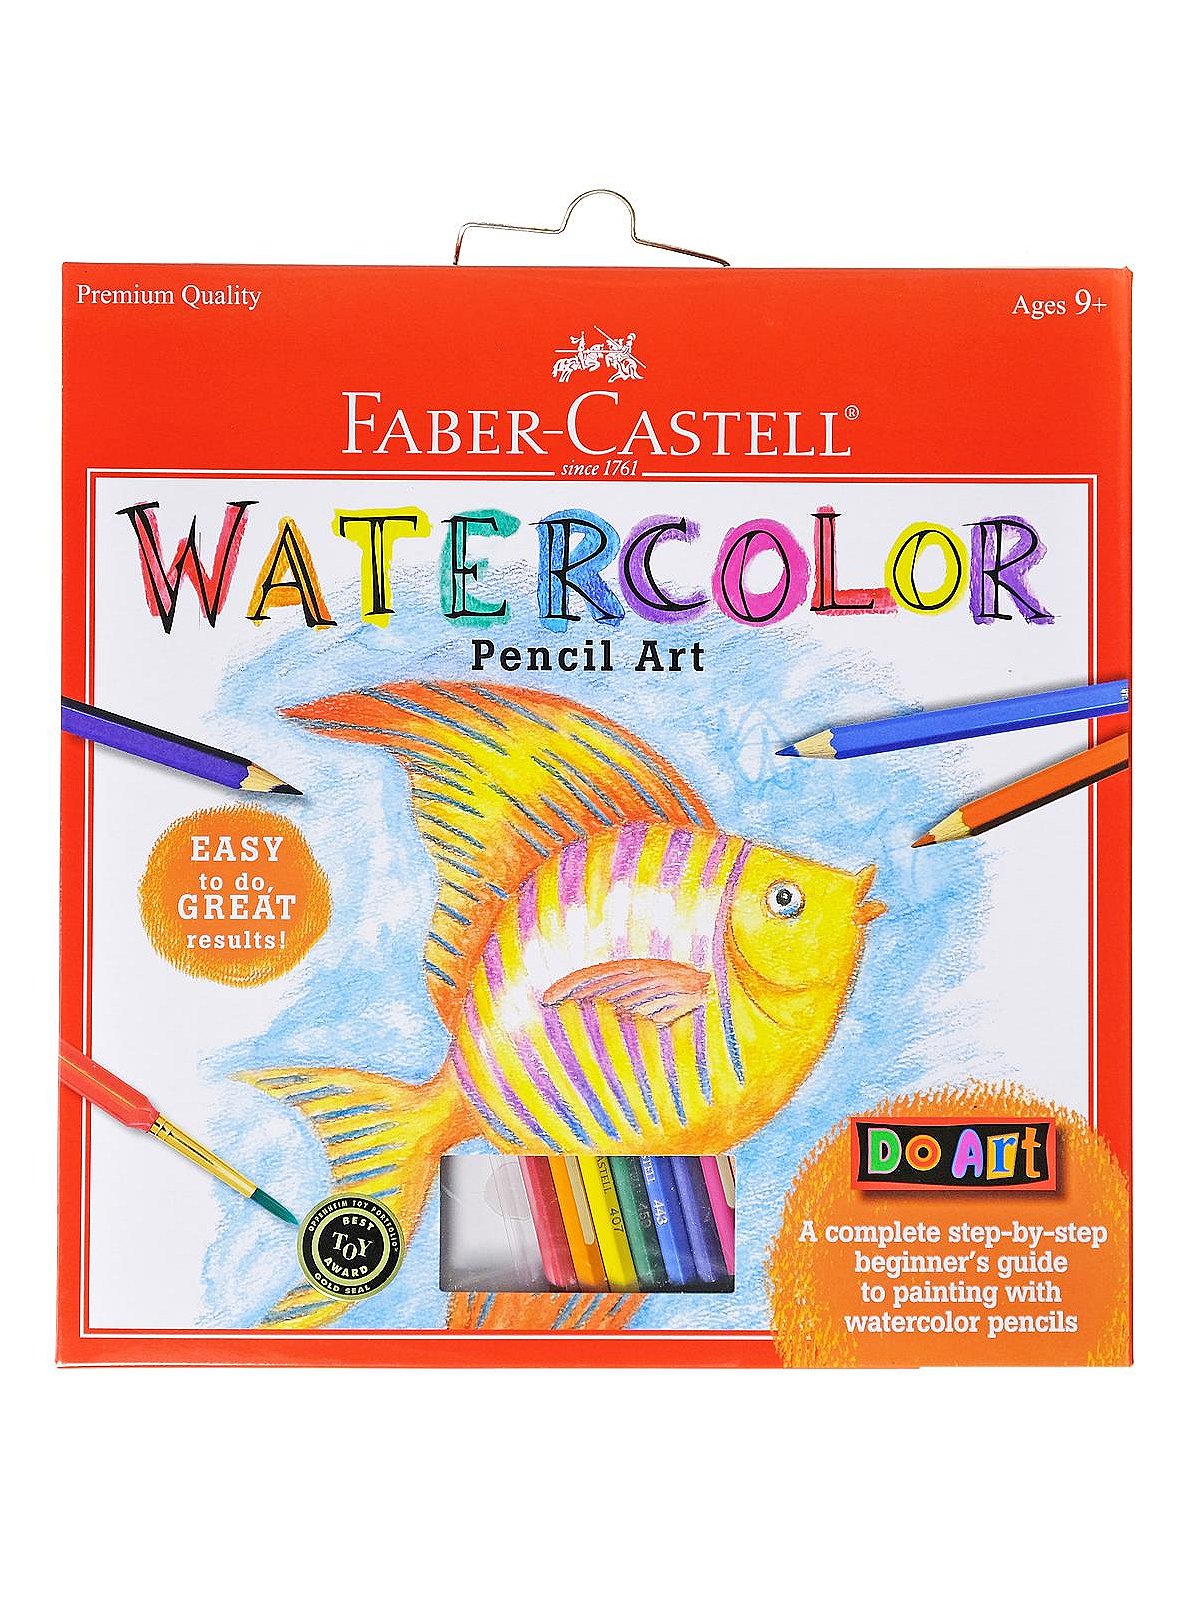 Faber-Castell Watercolor Pencils